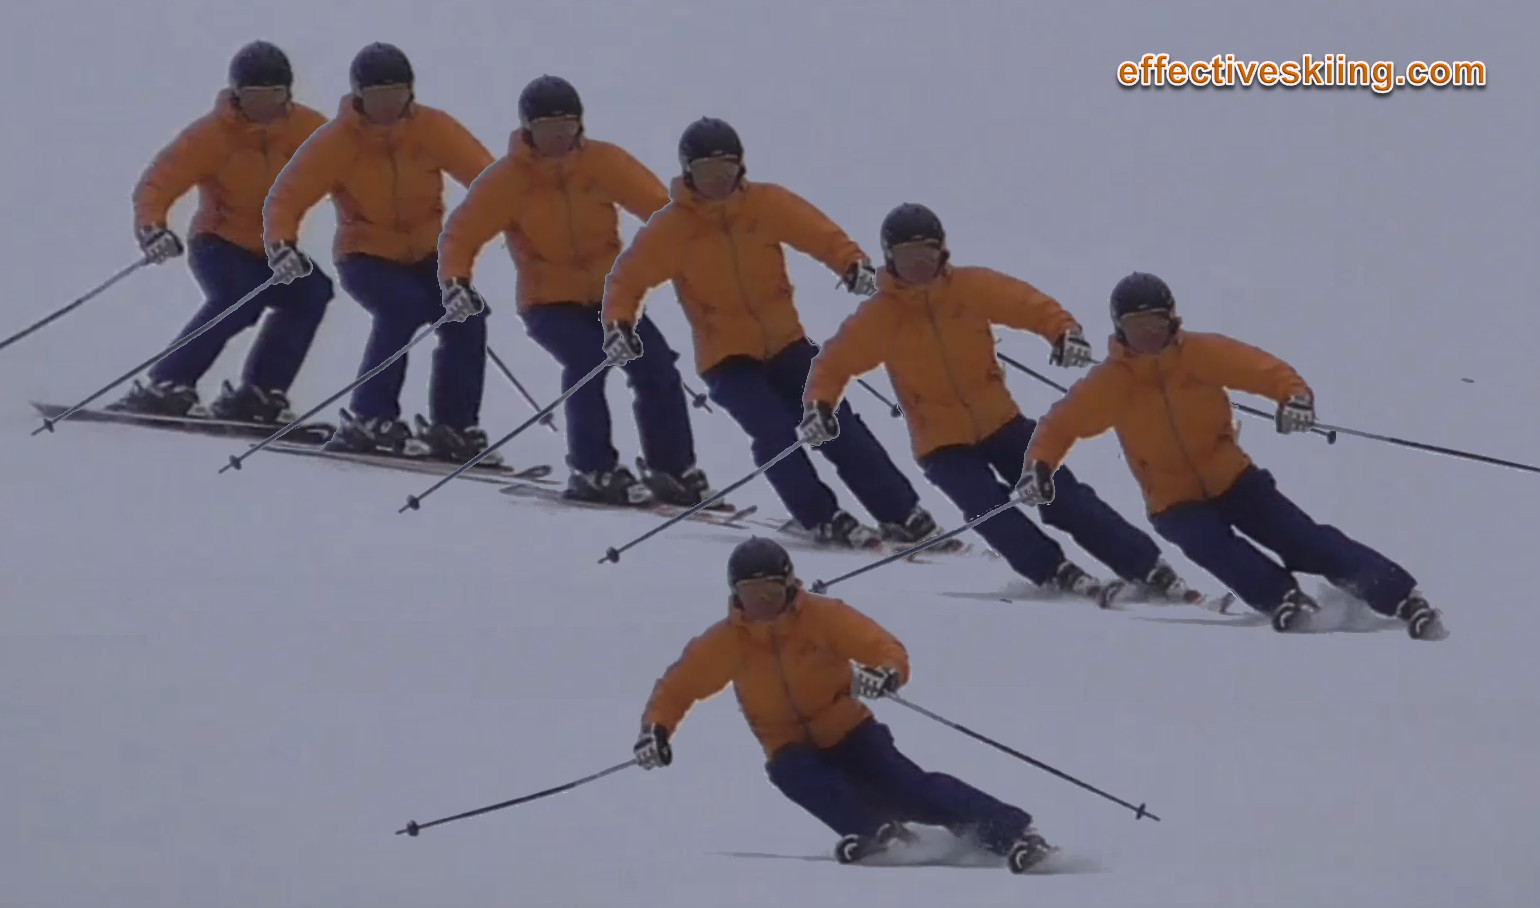 Getting forward <b>across</b> the skis